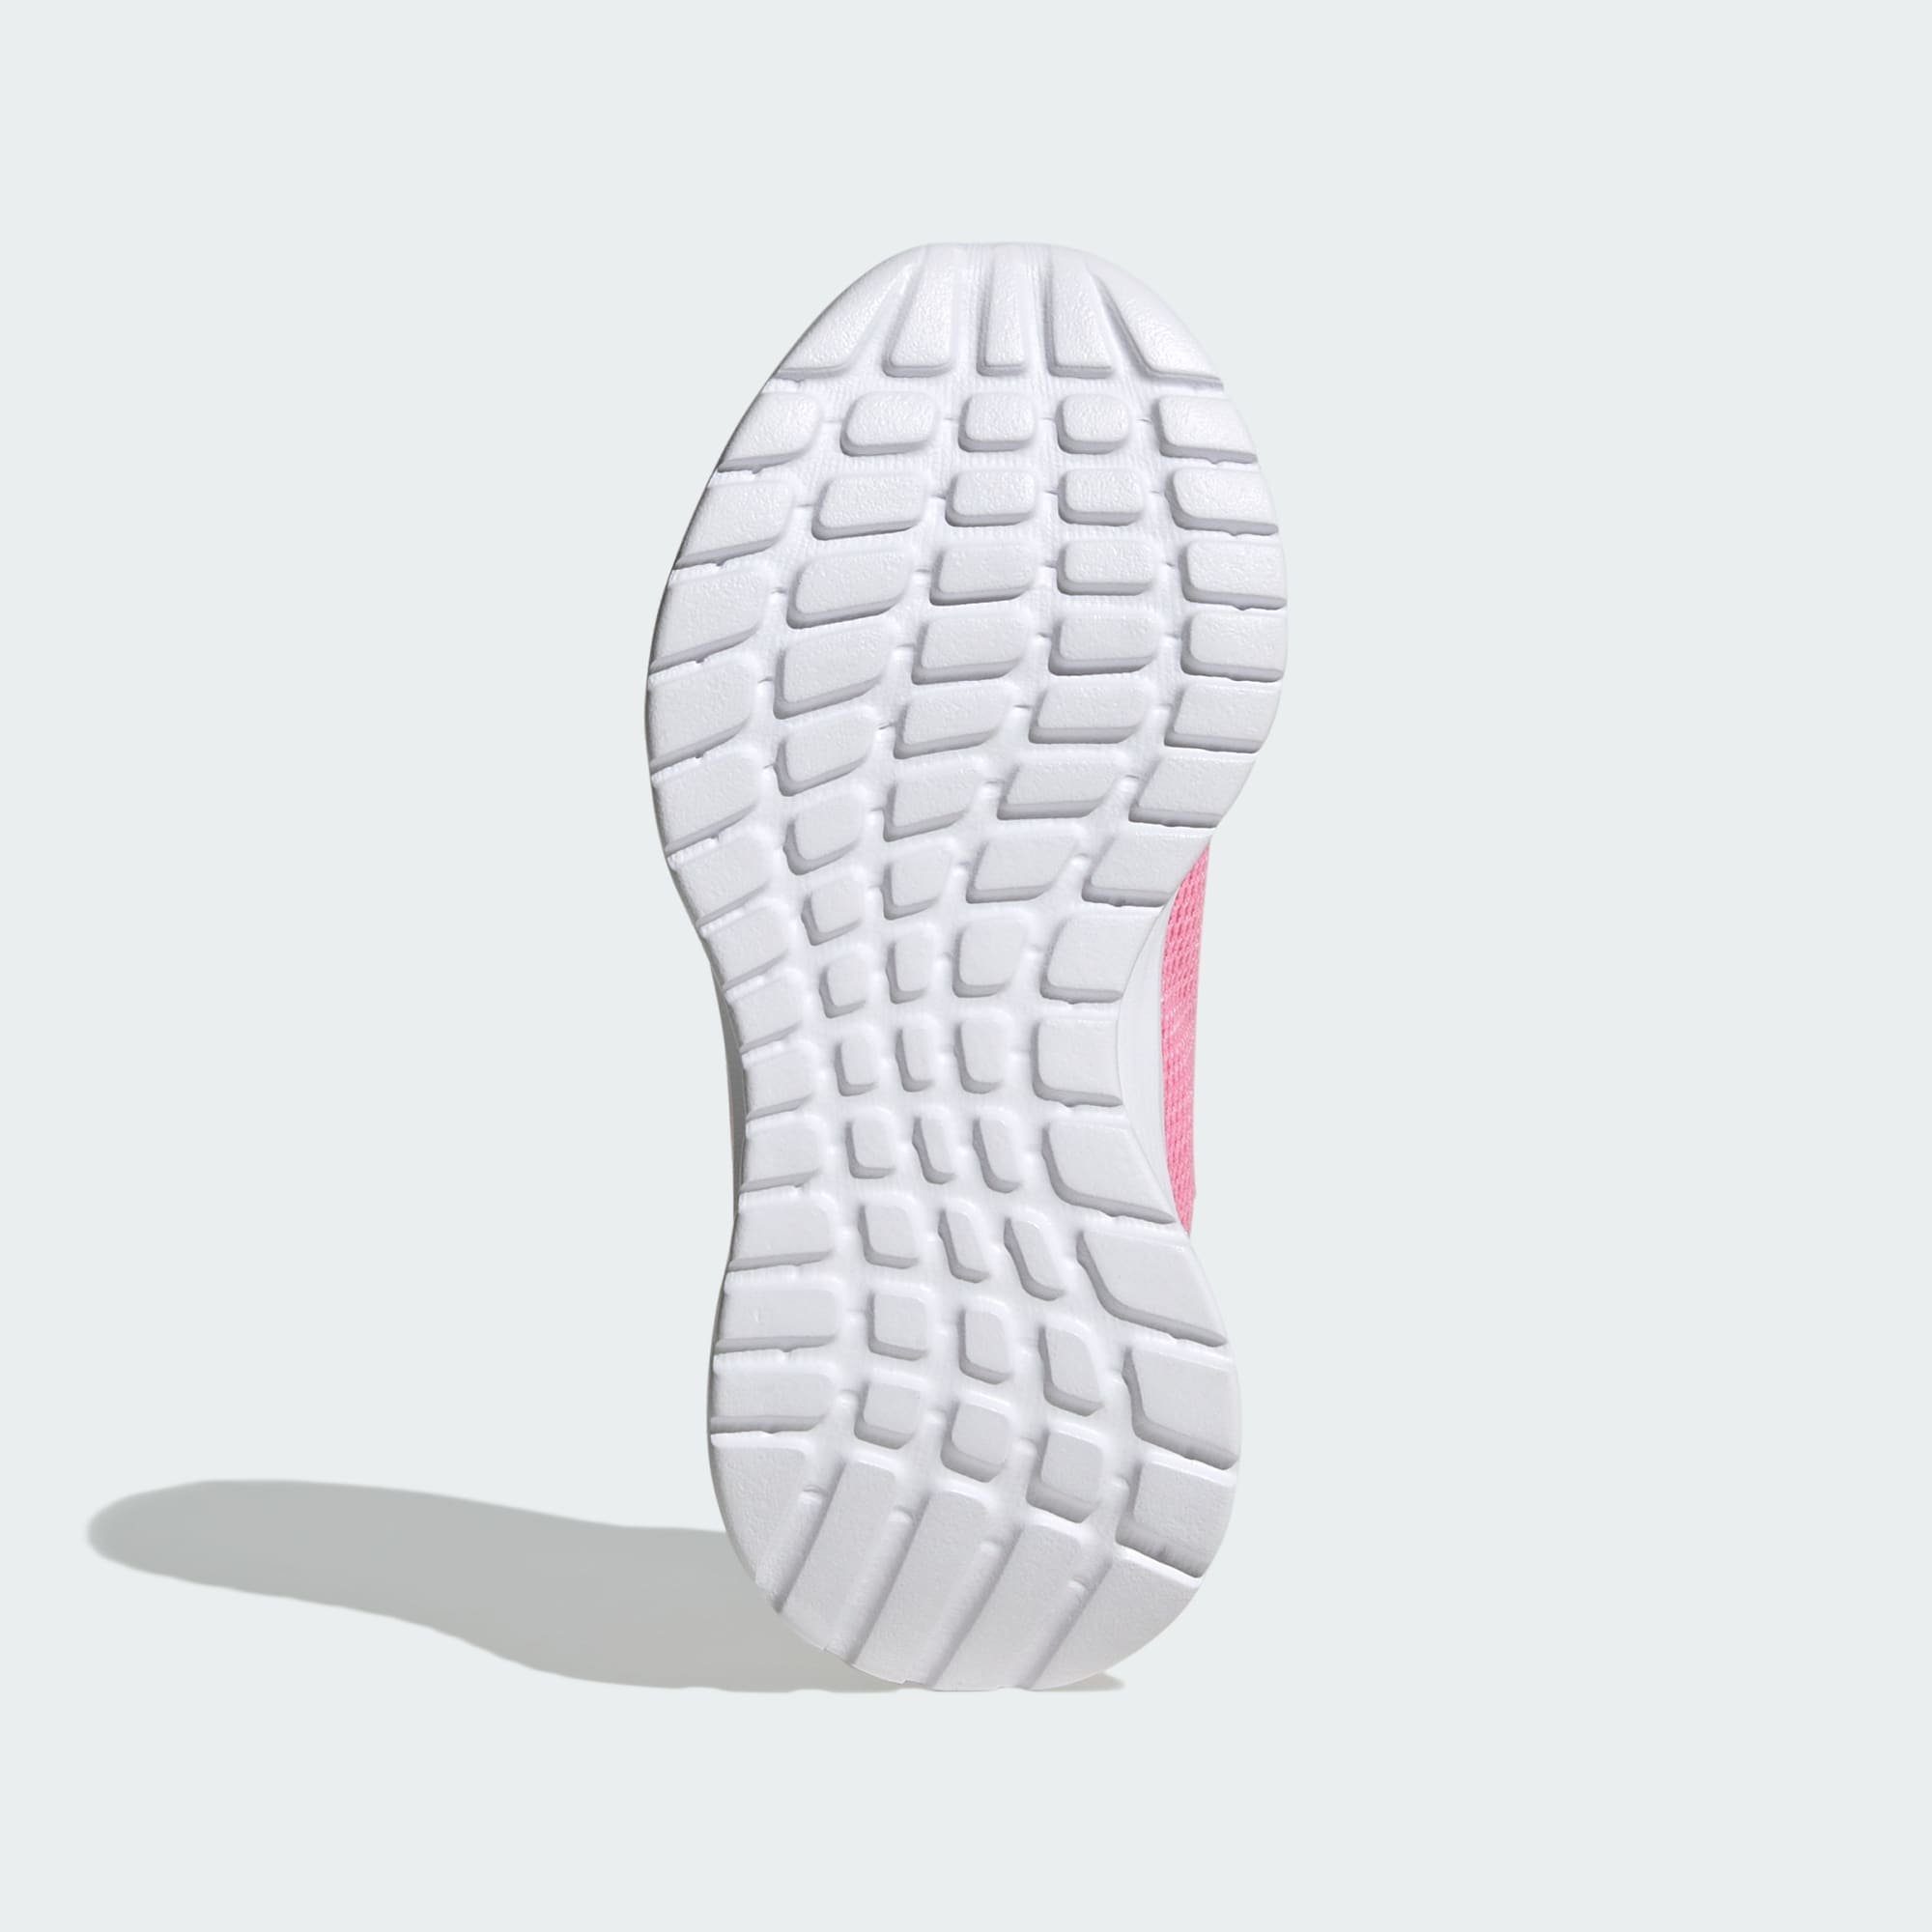 Cloud Orange / / TENSAUR Hazy Pink SCHUH Sportswear Sneaker RUN adidas Bliss White